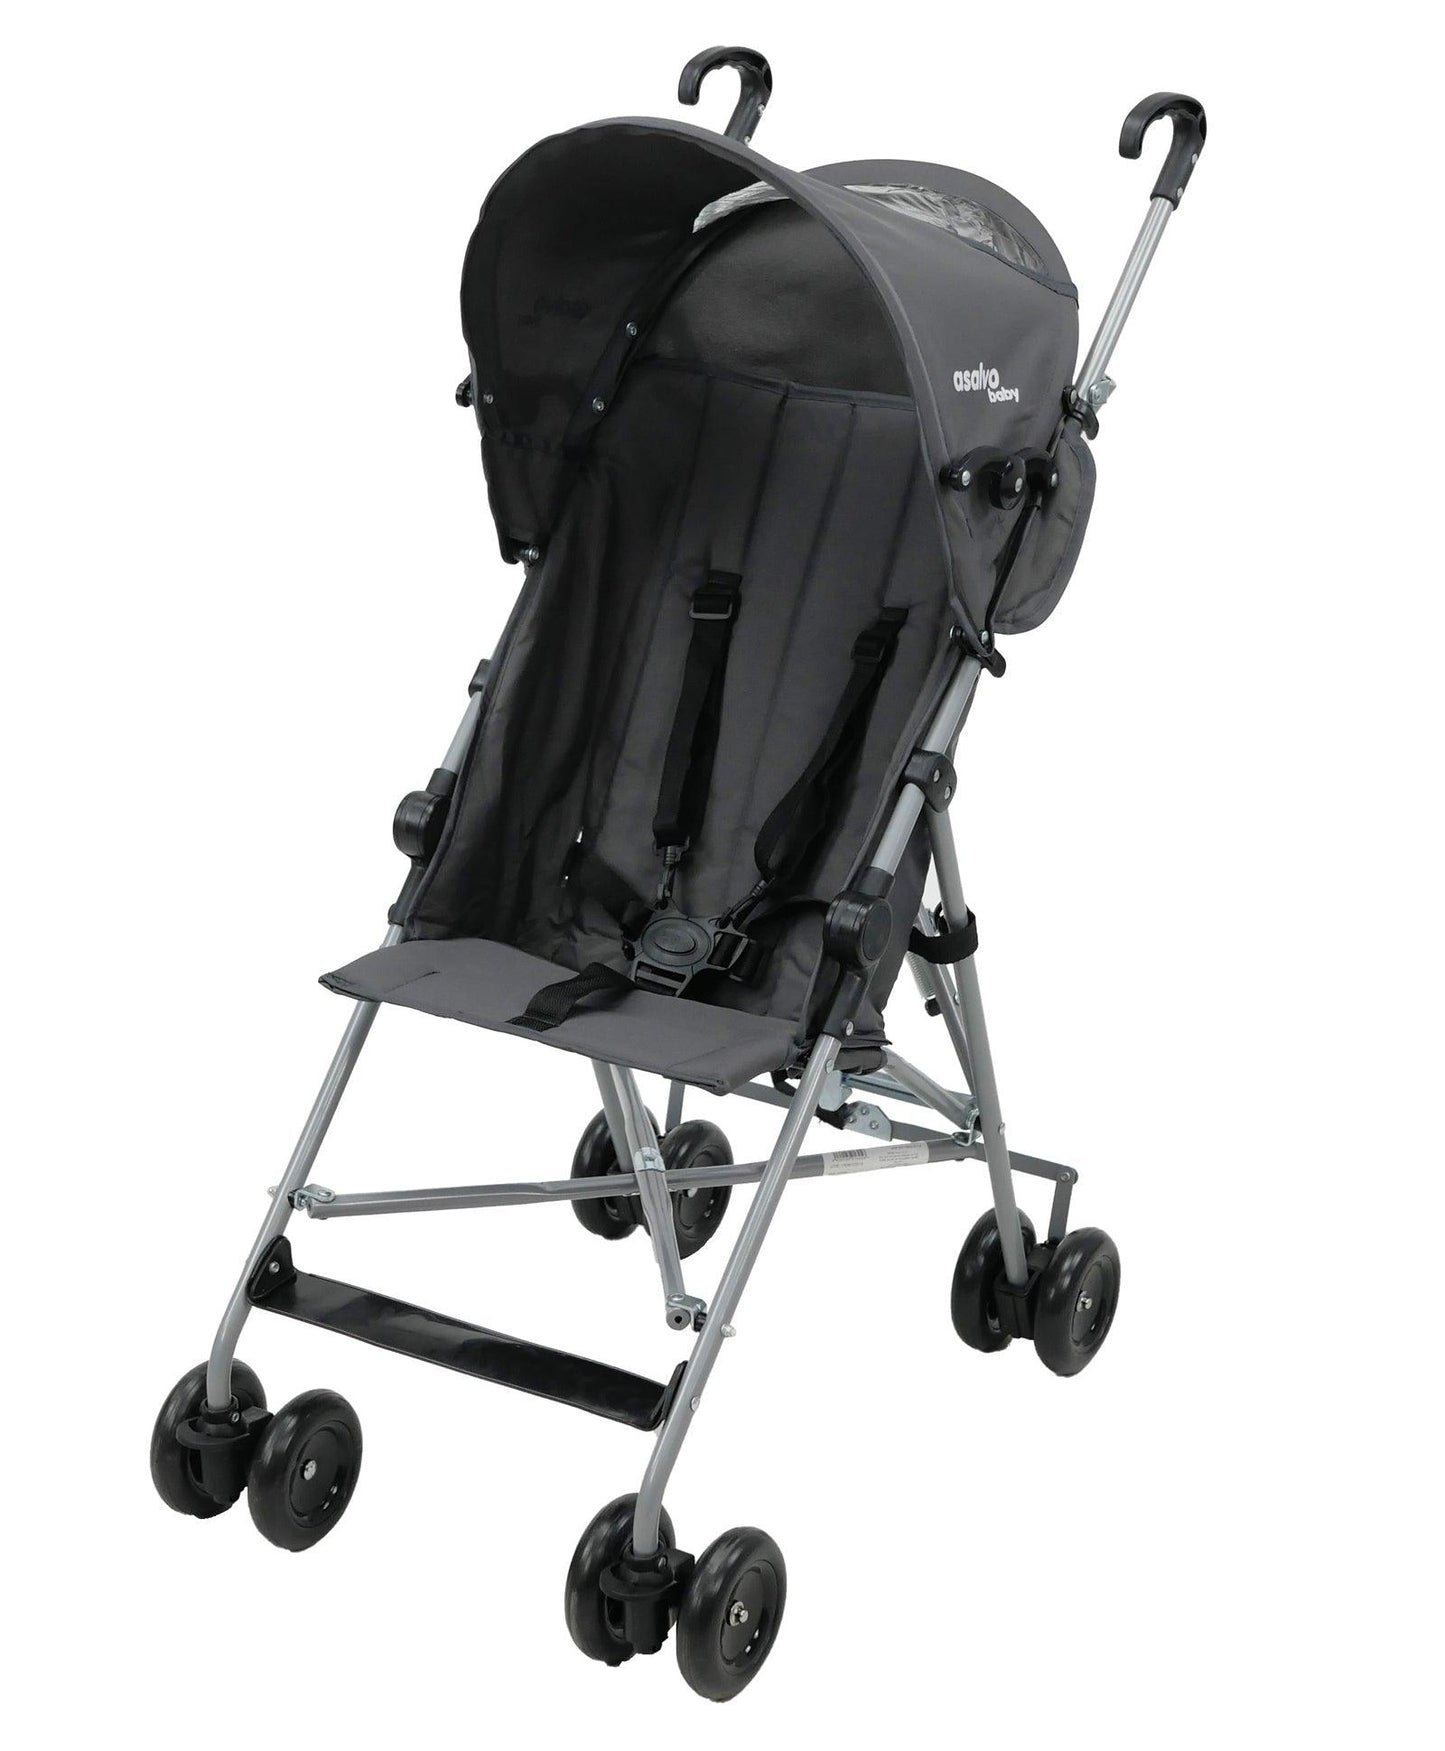 PATOYS | Asalvo 16256 Stroller Moving Coa l For Newborn Baby, Infant Kids, - PATOYS